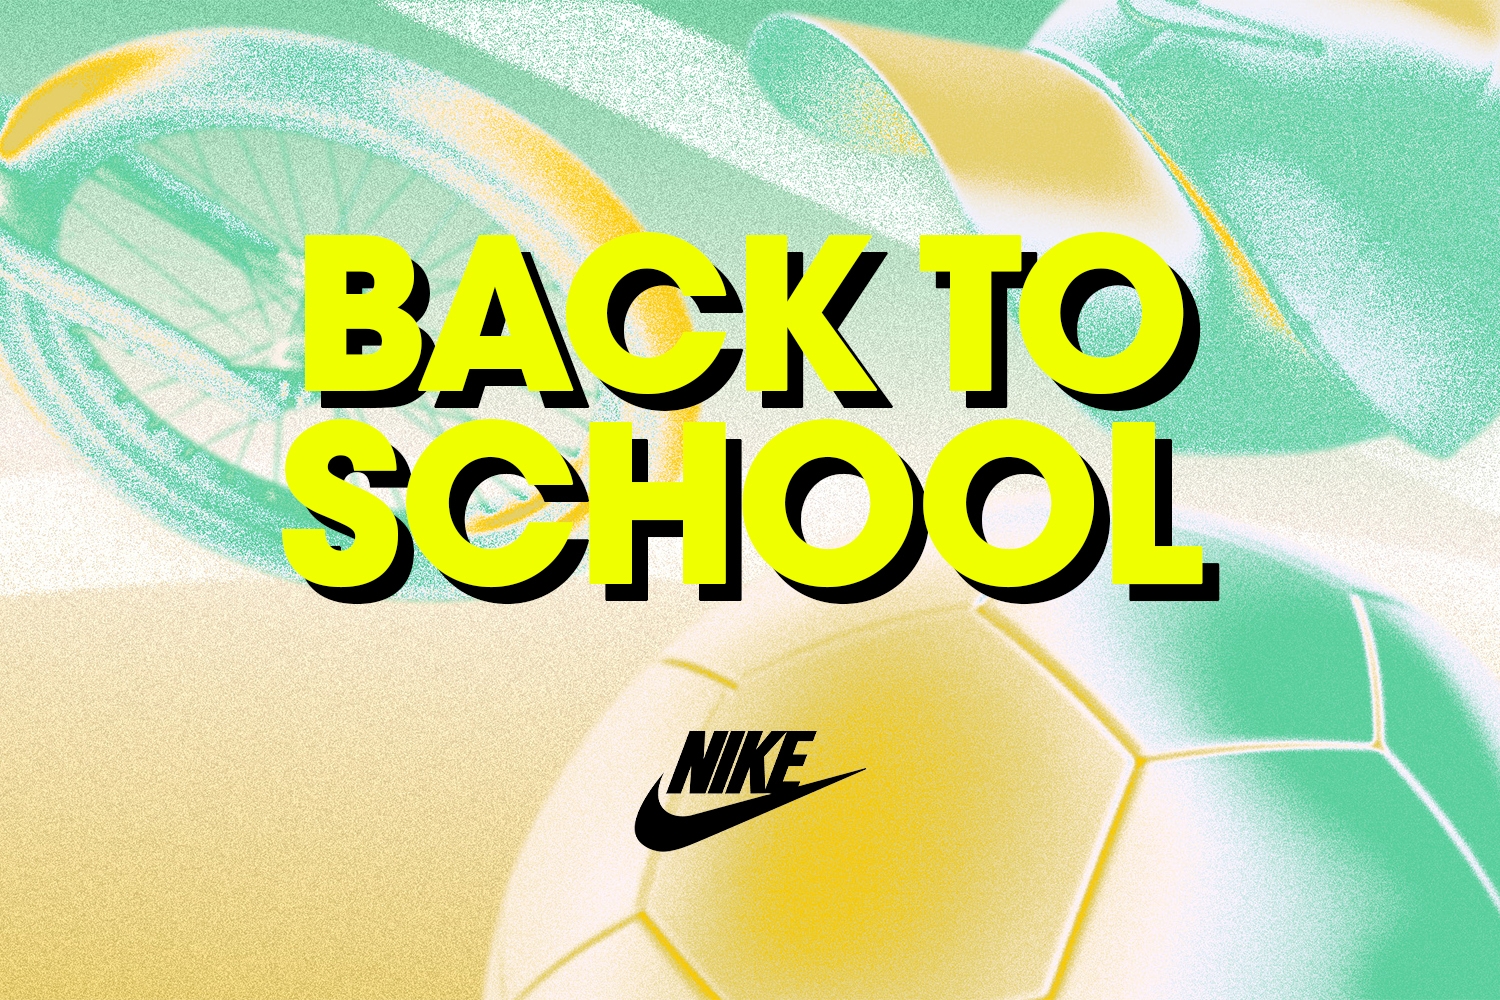 In de Nike Back To School sale profiteer je nu van 25% korting